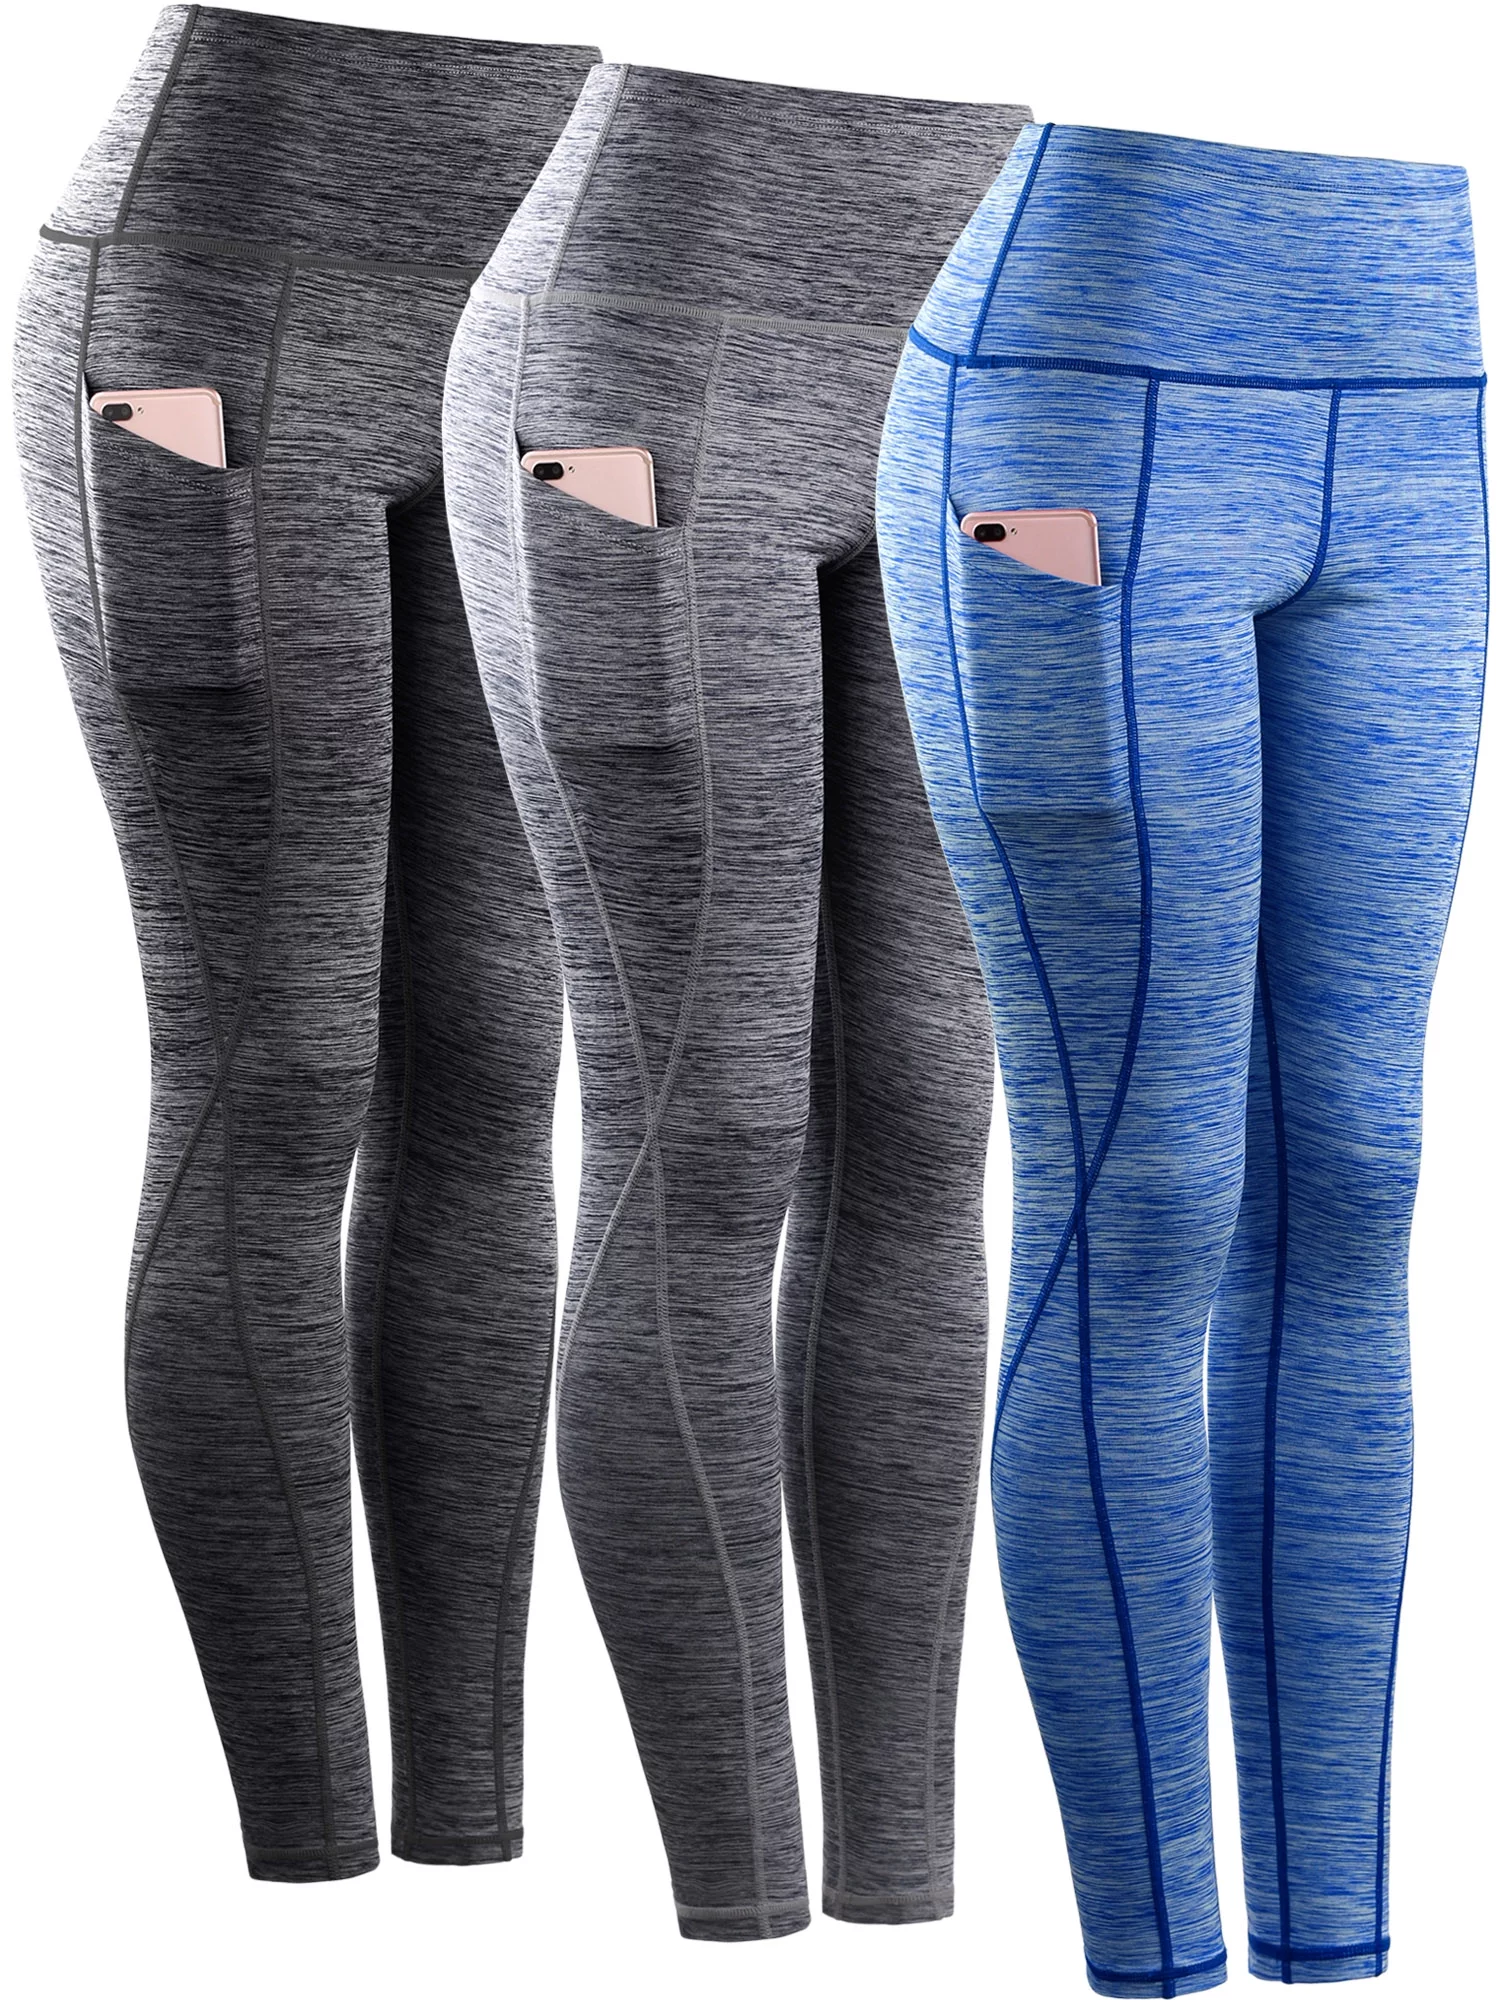 NELEUS Womens Yoga Running Leggings with Pocket Tummy Control High Waist,Black+Gray+Blue,US Size M